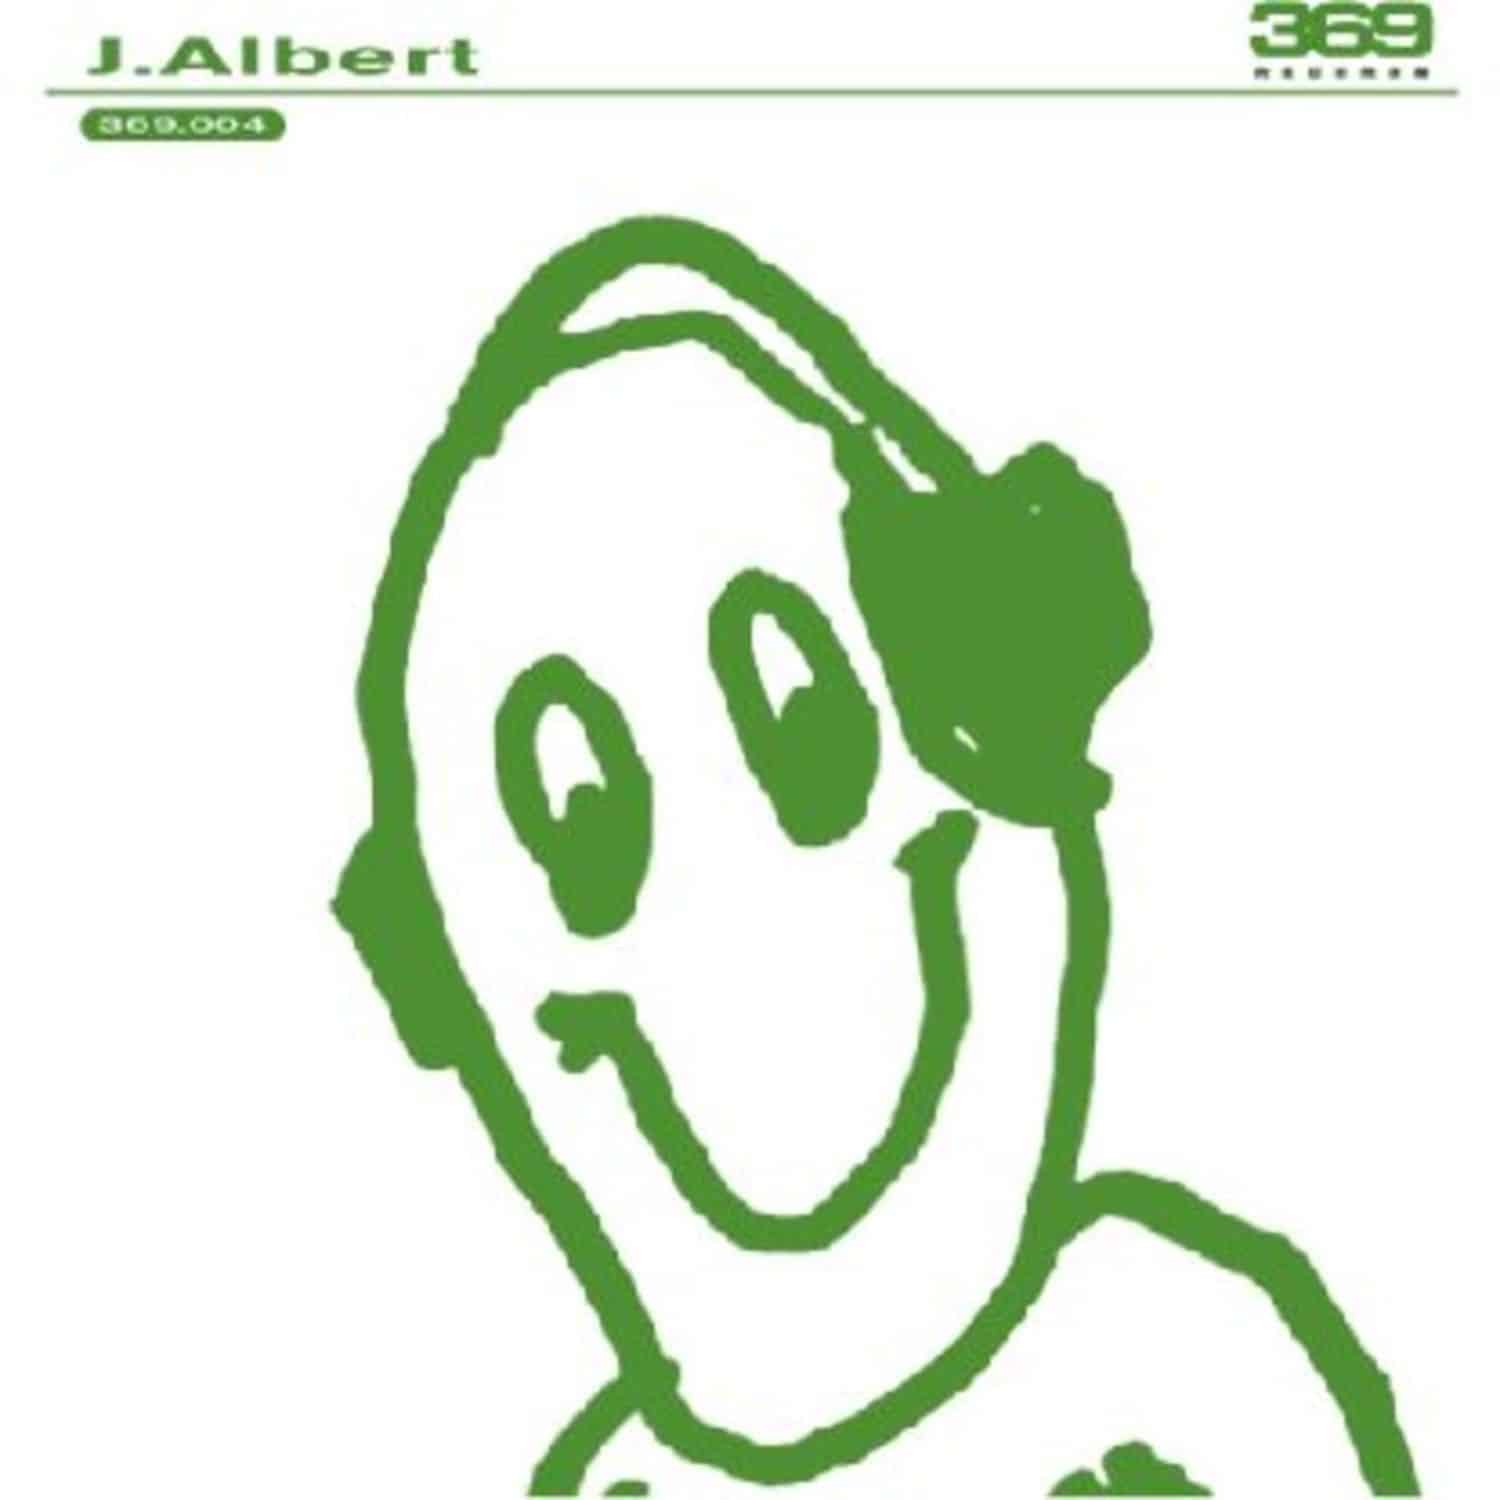 J. Albert - 369.004